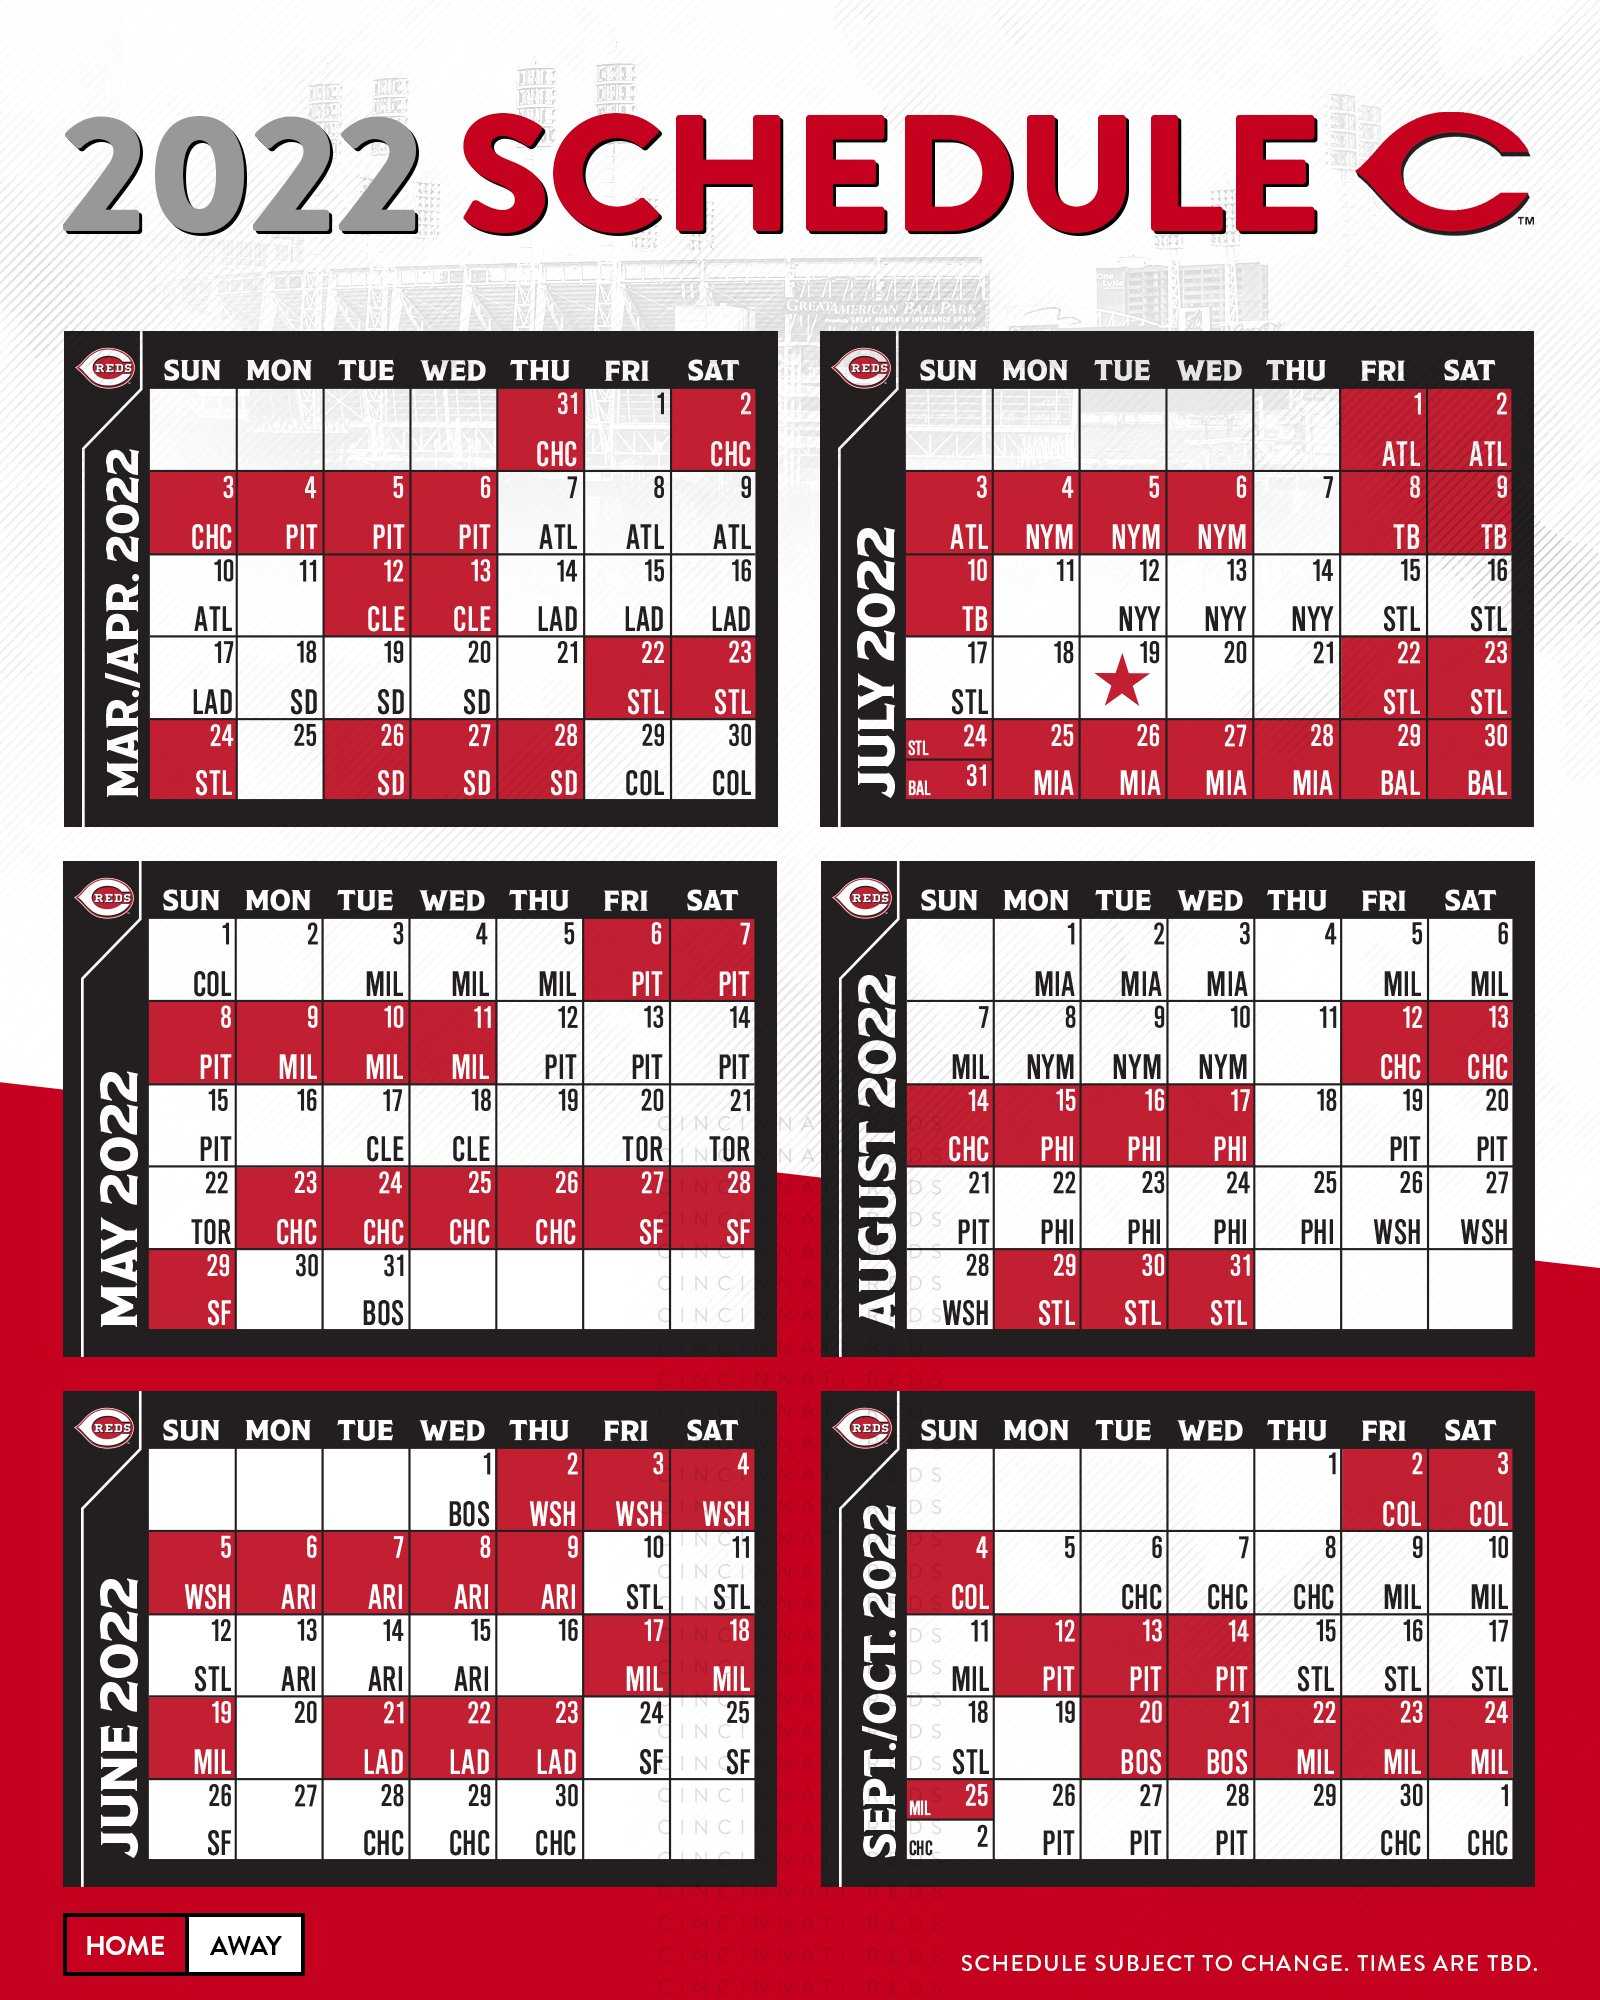 Mlb 2022 Schedule Cincinnati Reds Release 2022 Schedule: Here Are The Highlights